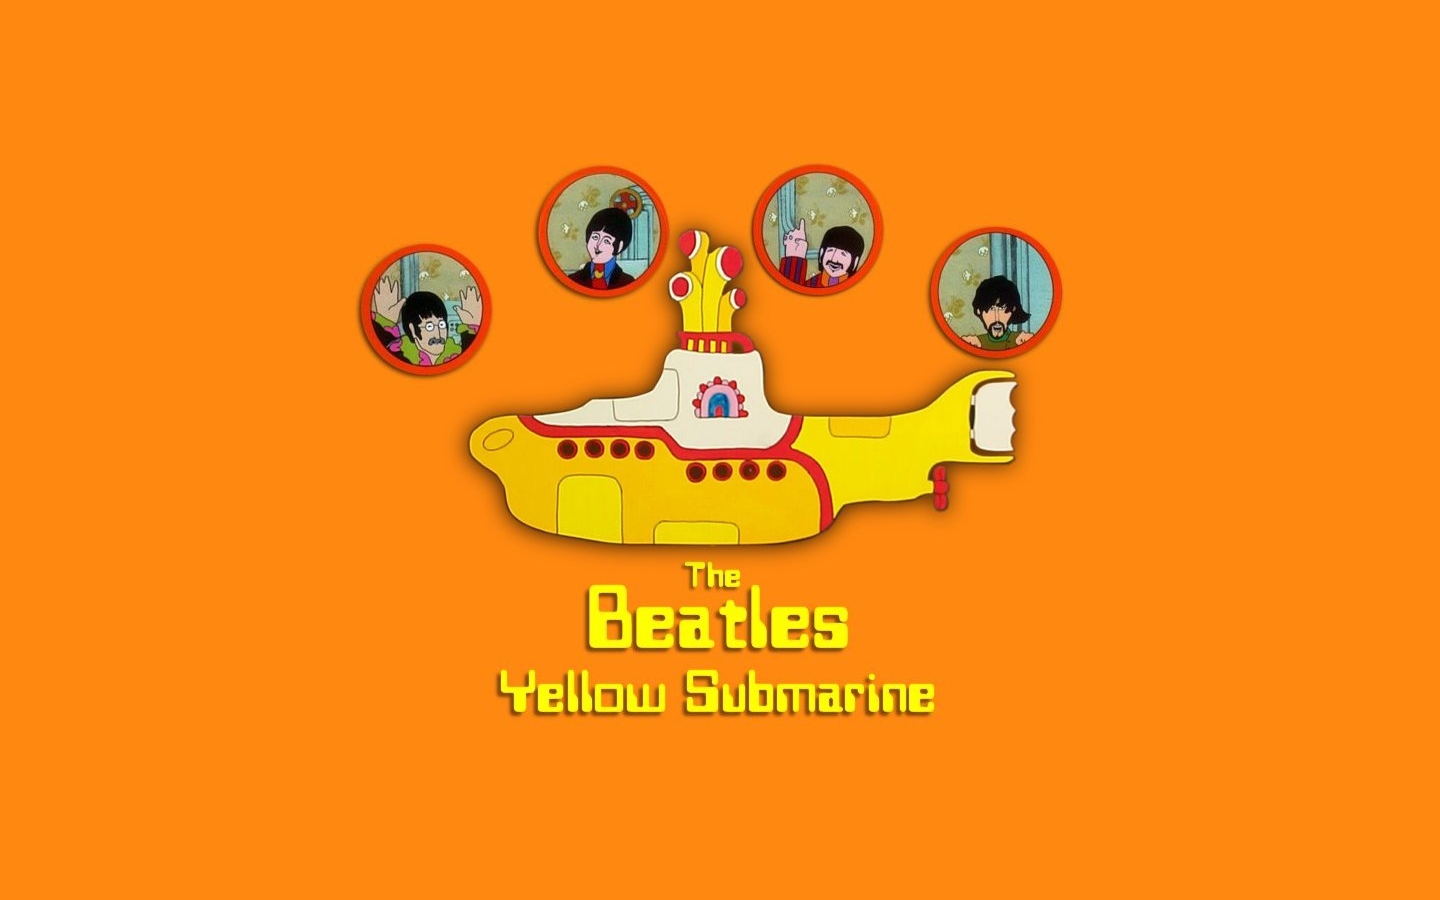 The Beatles Yellow Submarine Wallpaper The beatles yellow submarine 1440x900